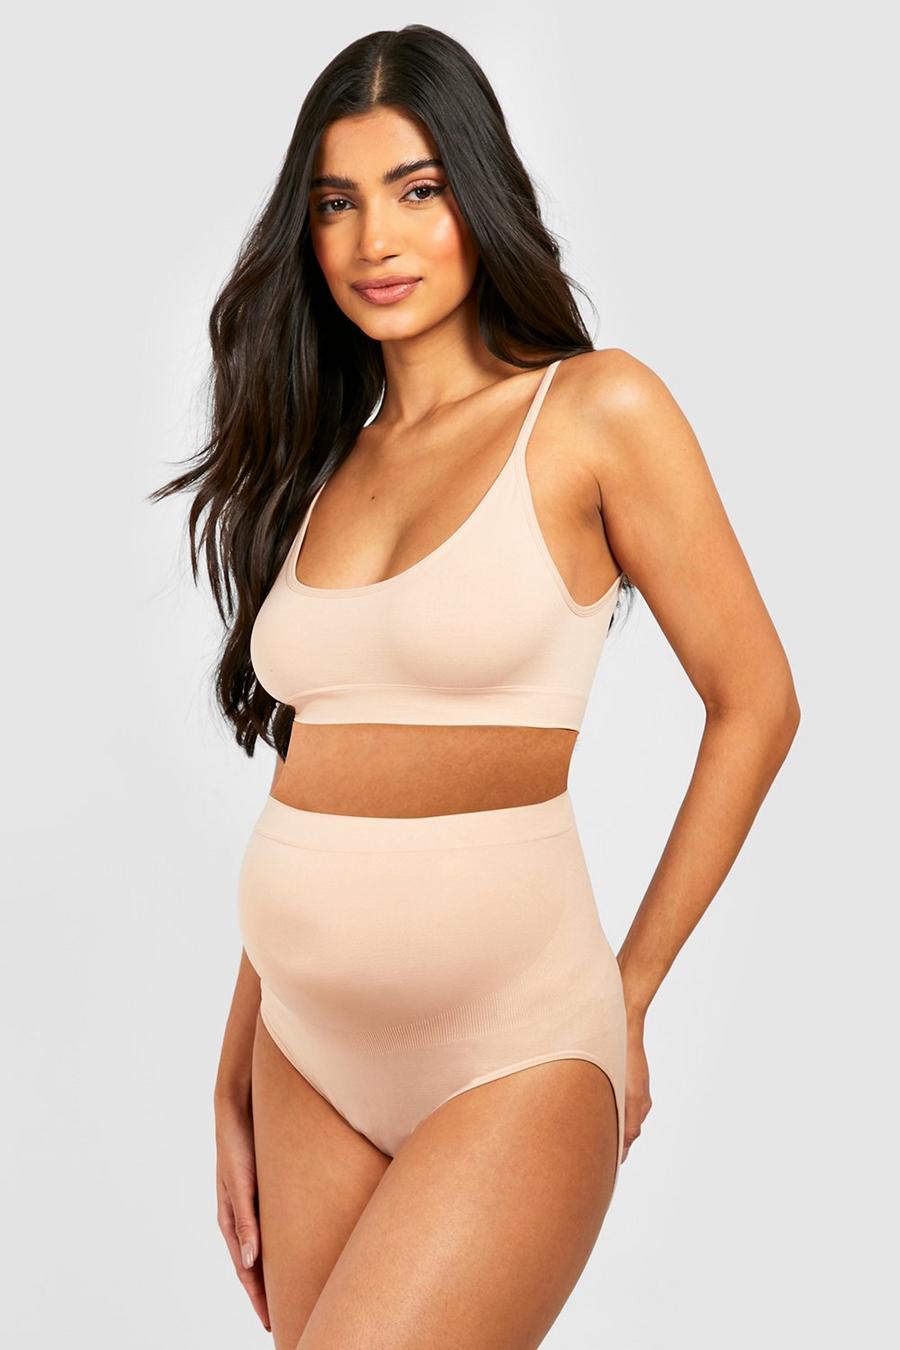 Bump Support Knickers - Women Maternity High Waist Underwear